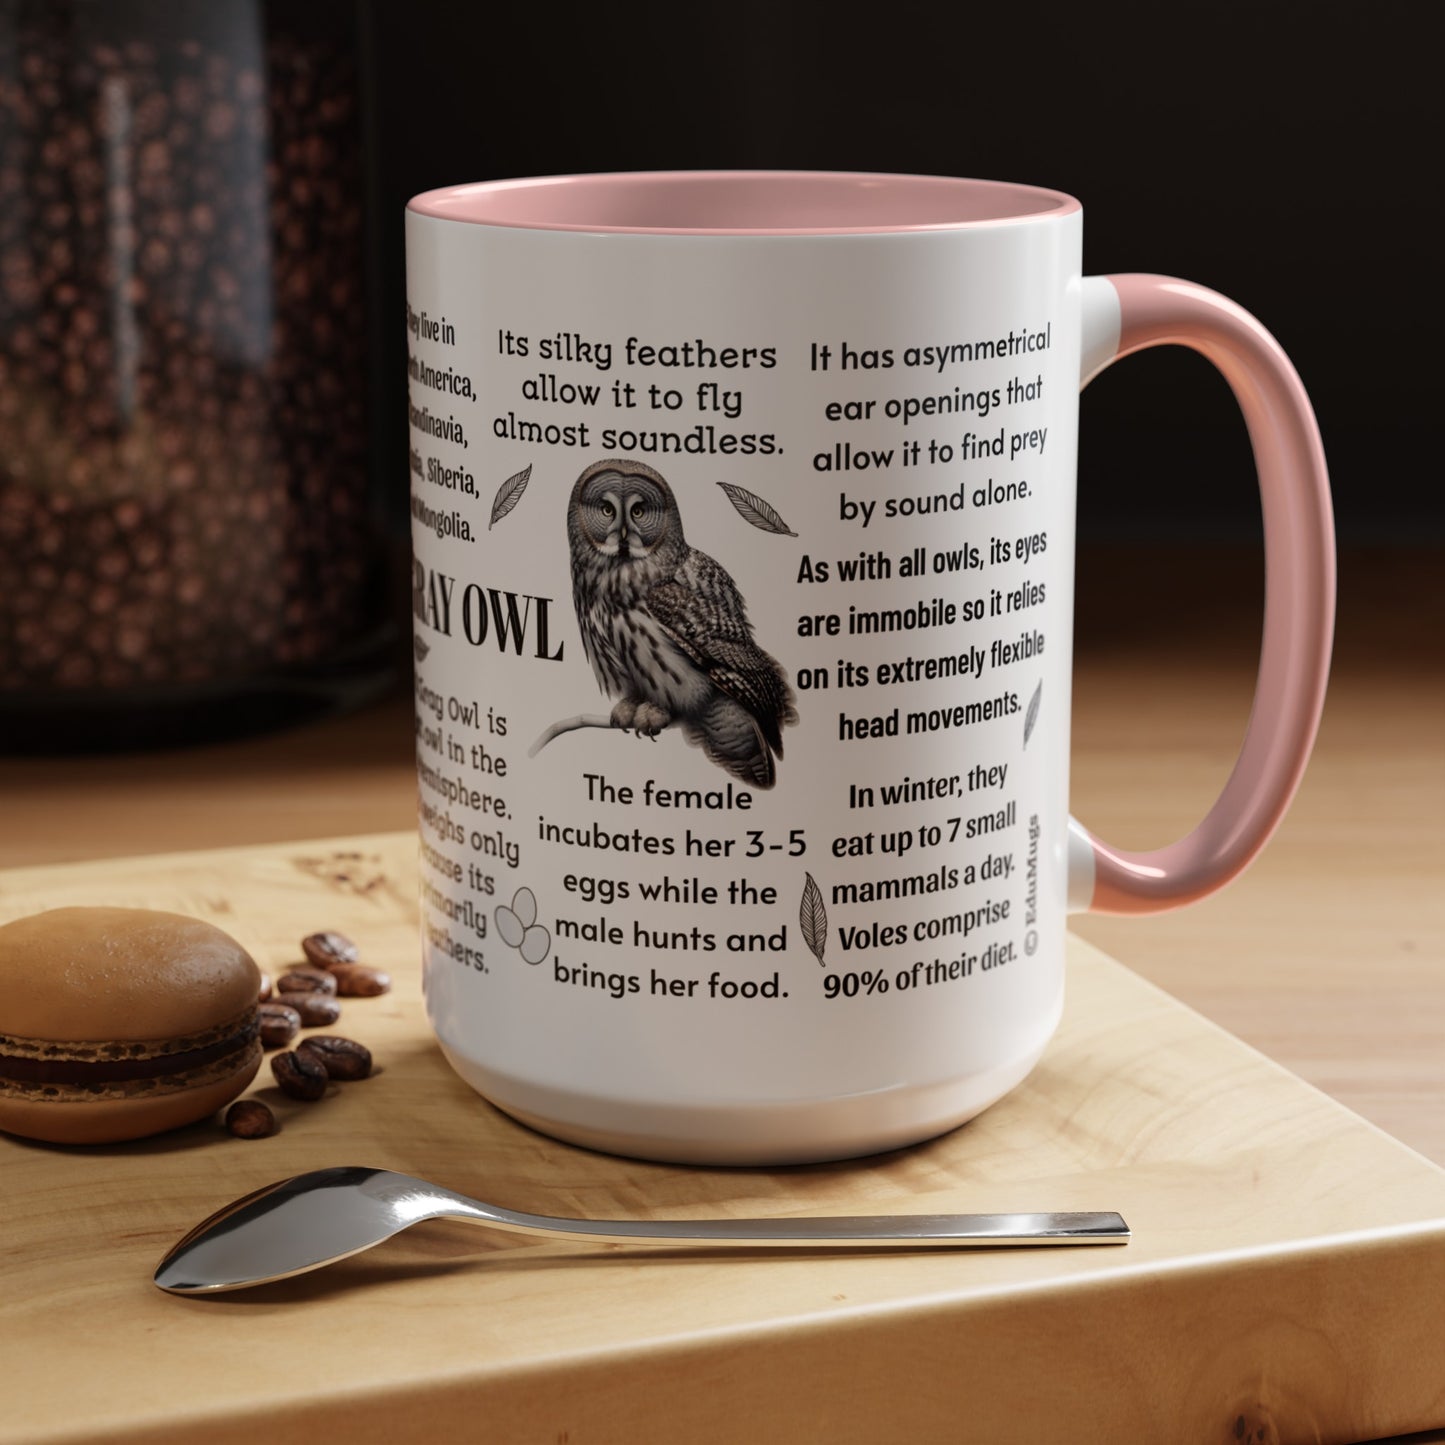 Great Gray Owl Coffee Mug, 11 oz or 15oz